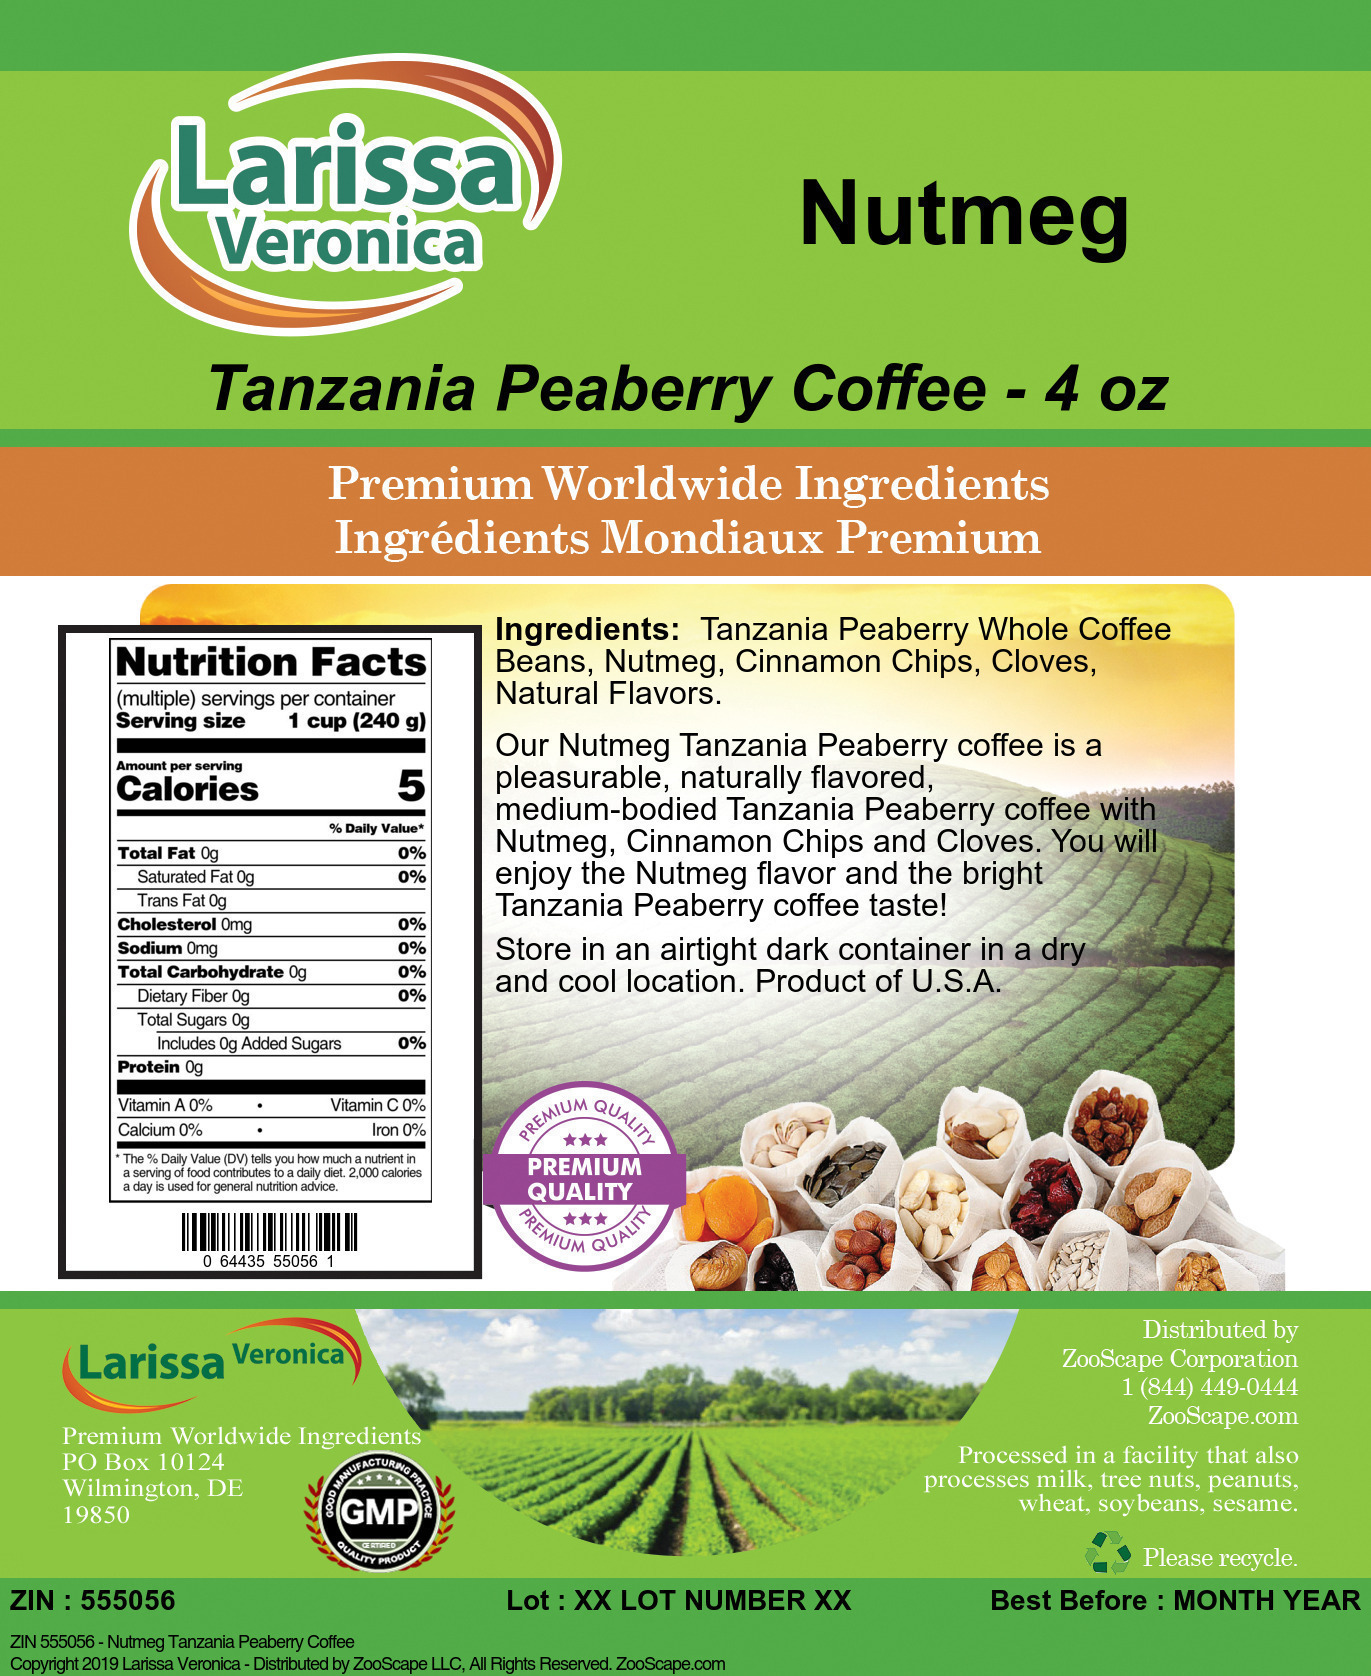 Nutmeg Tanzania Peaberry Coffee - Label